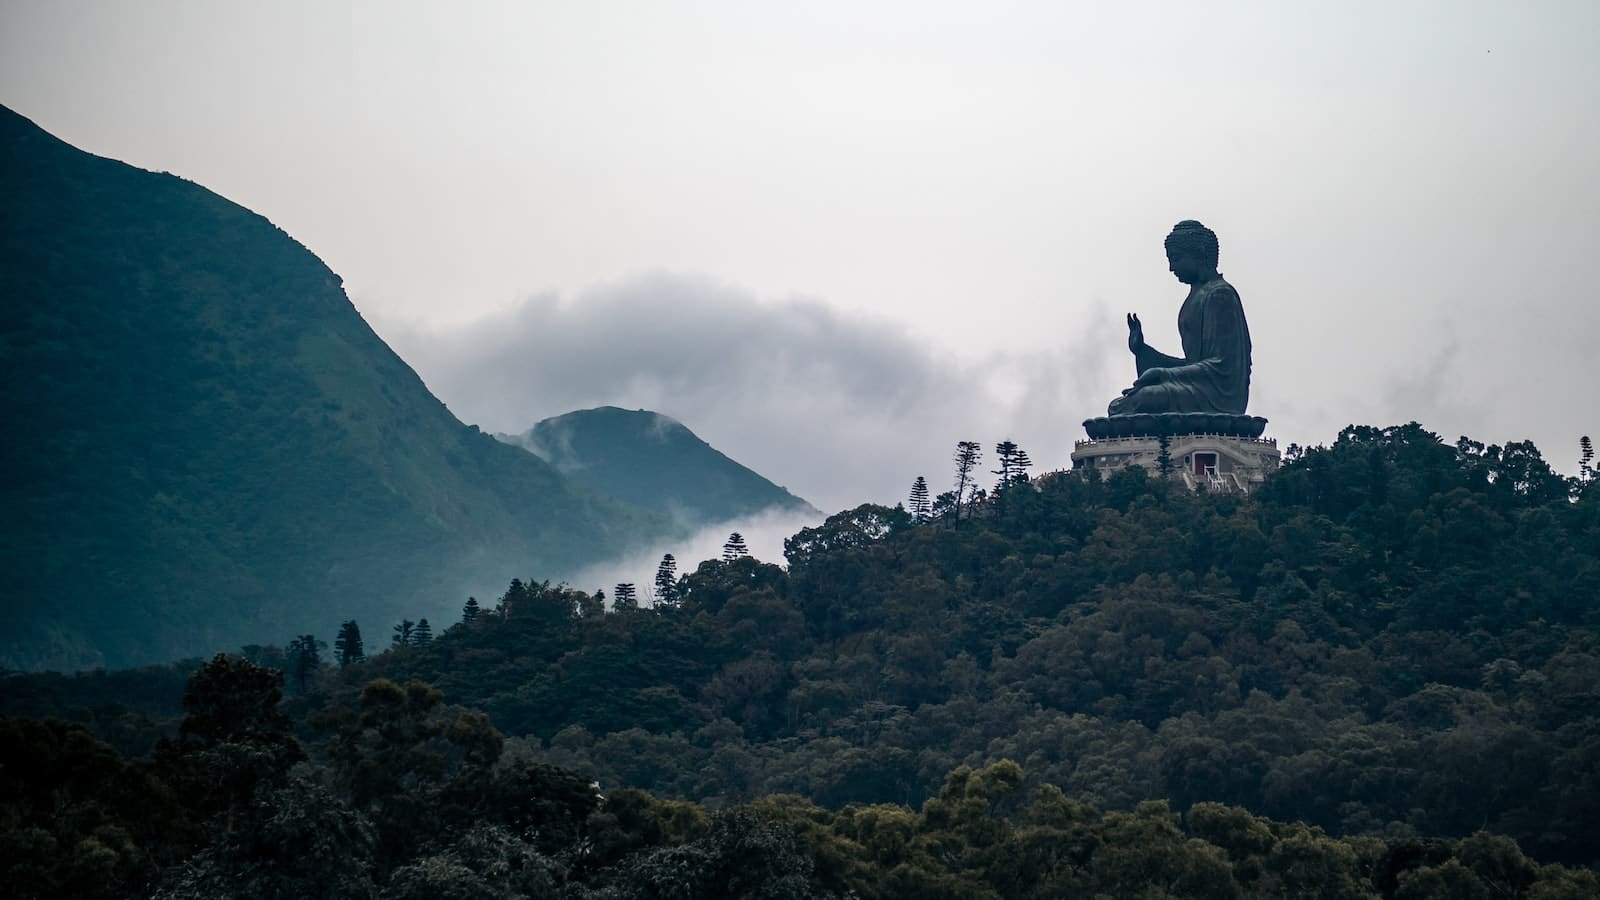 Winzig und weise: Entdecke die faszinierende Welt des Mini Buddha!“ (Tiny yet Wise: Discover the Fascinating World of Mini Buddha!)